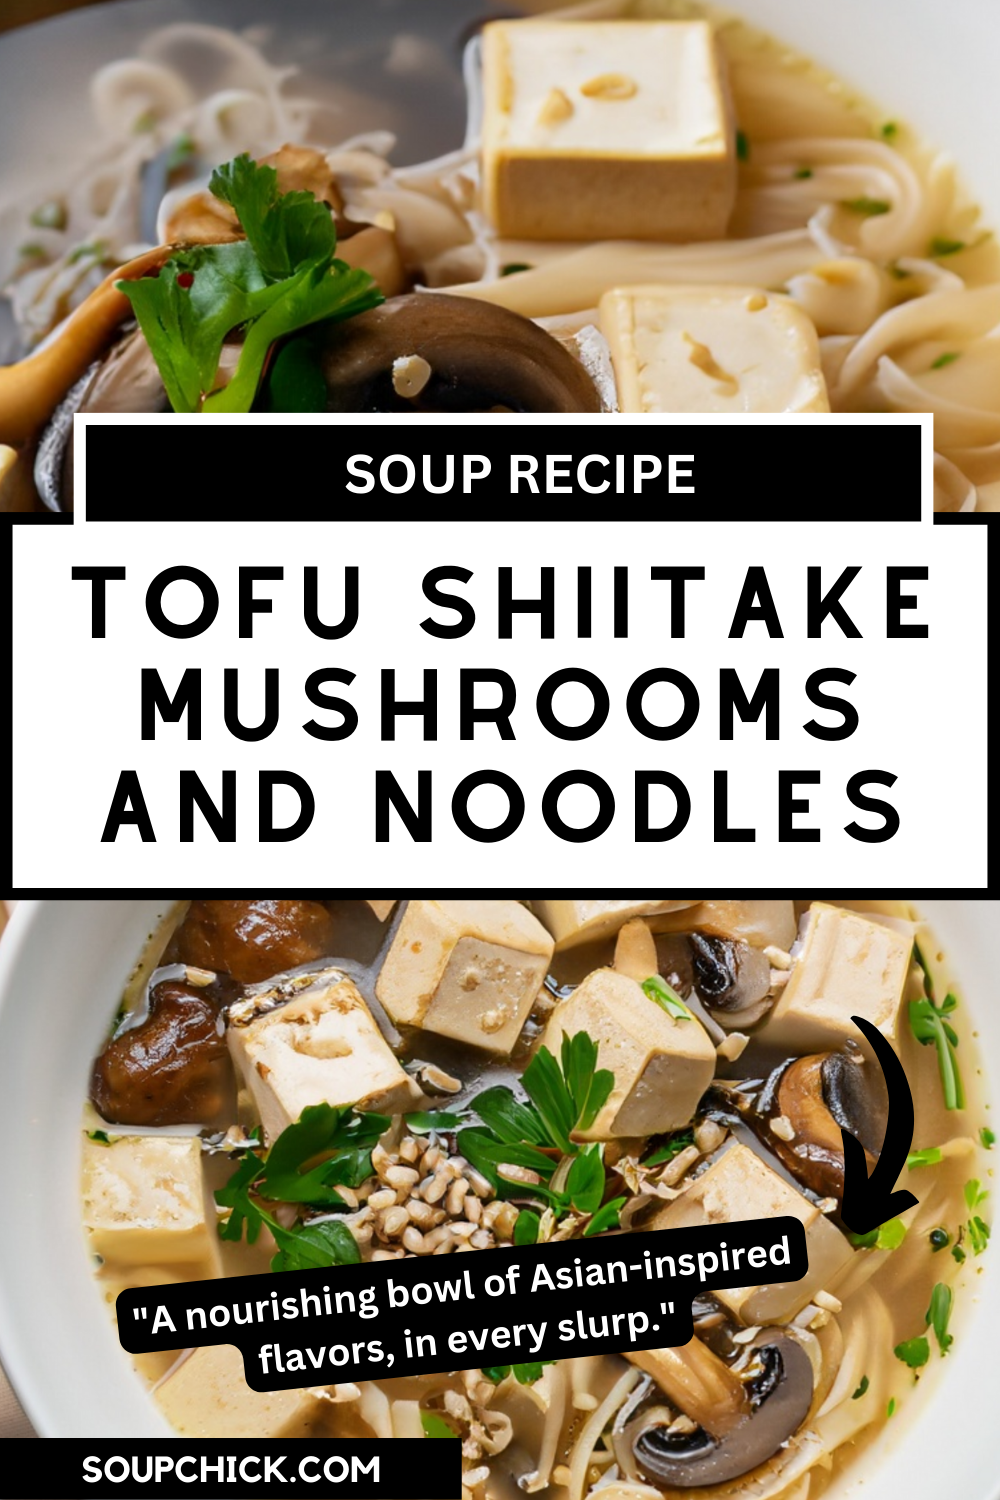 Tofu shiitake mushrooms and noodles